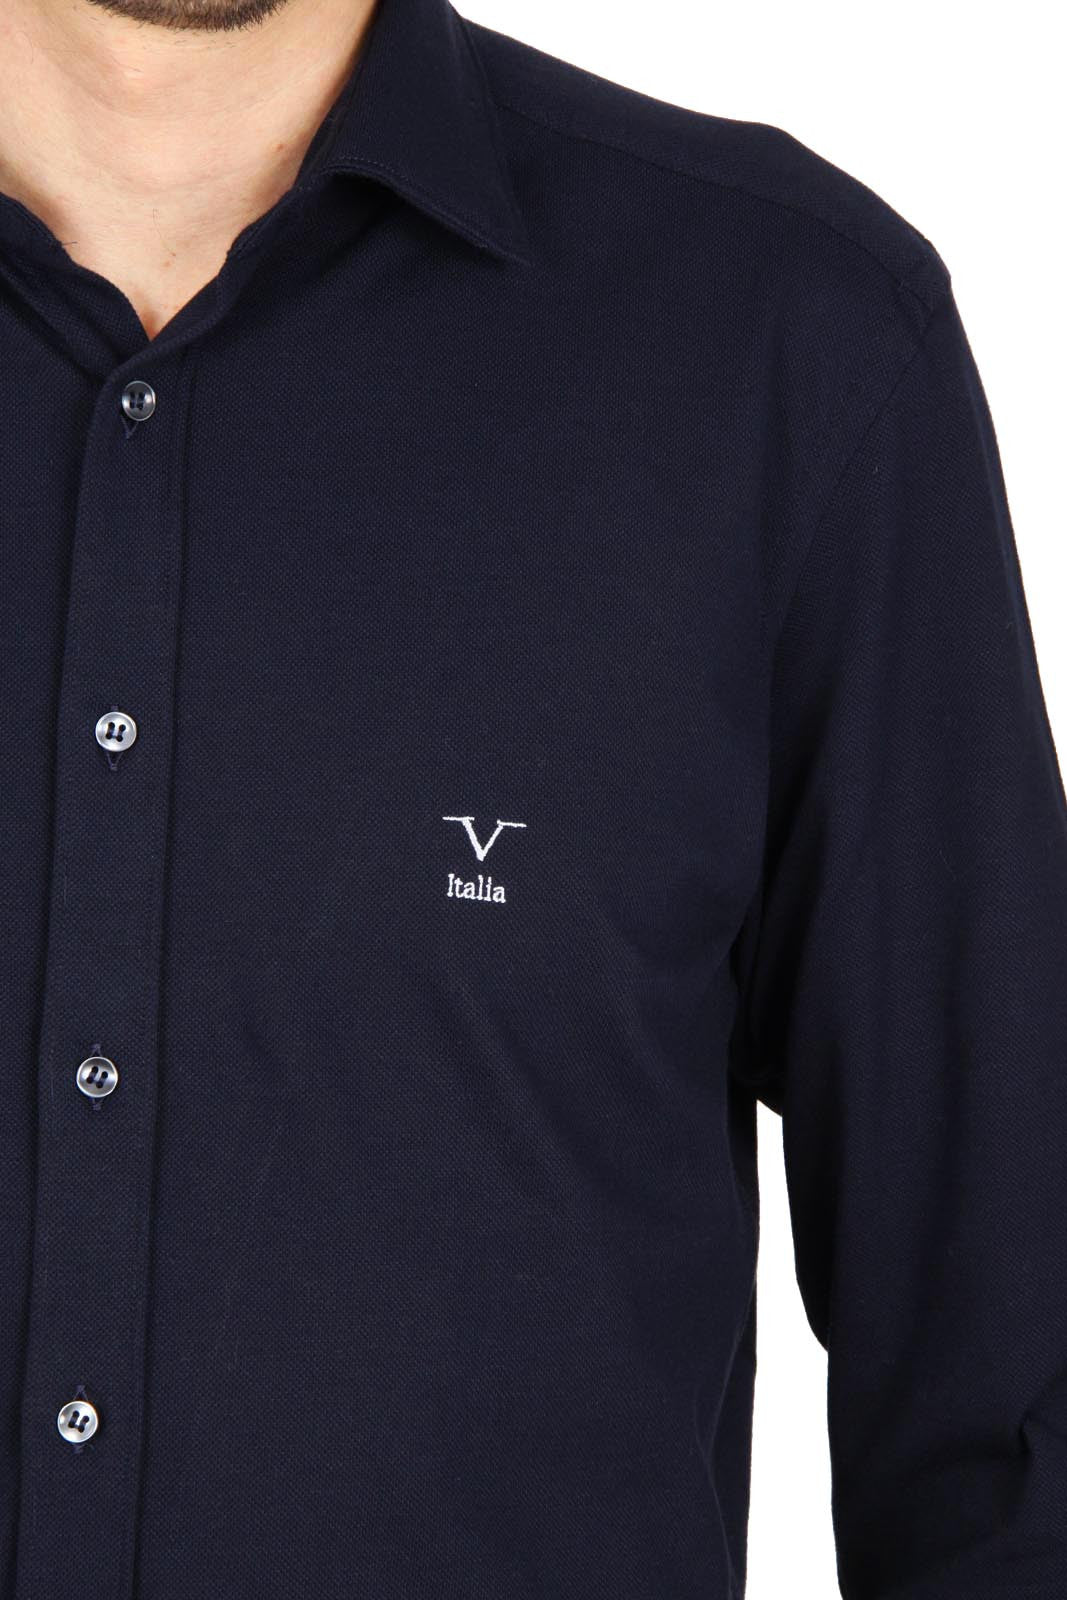 19V69, Shirts, 9v69 Italia By A Versace Crystal Logo Tee Shirt Nwt M